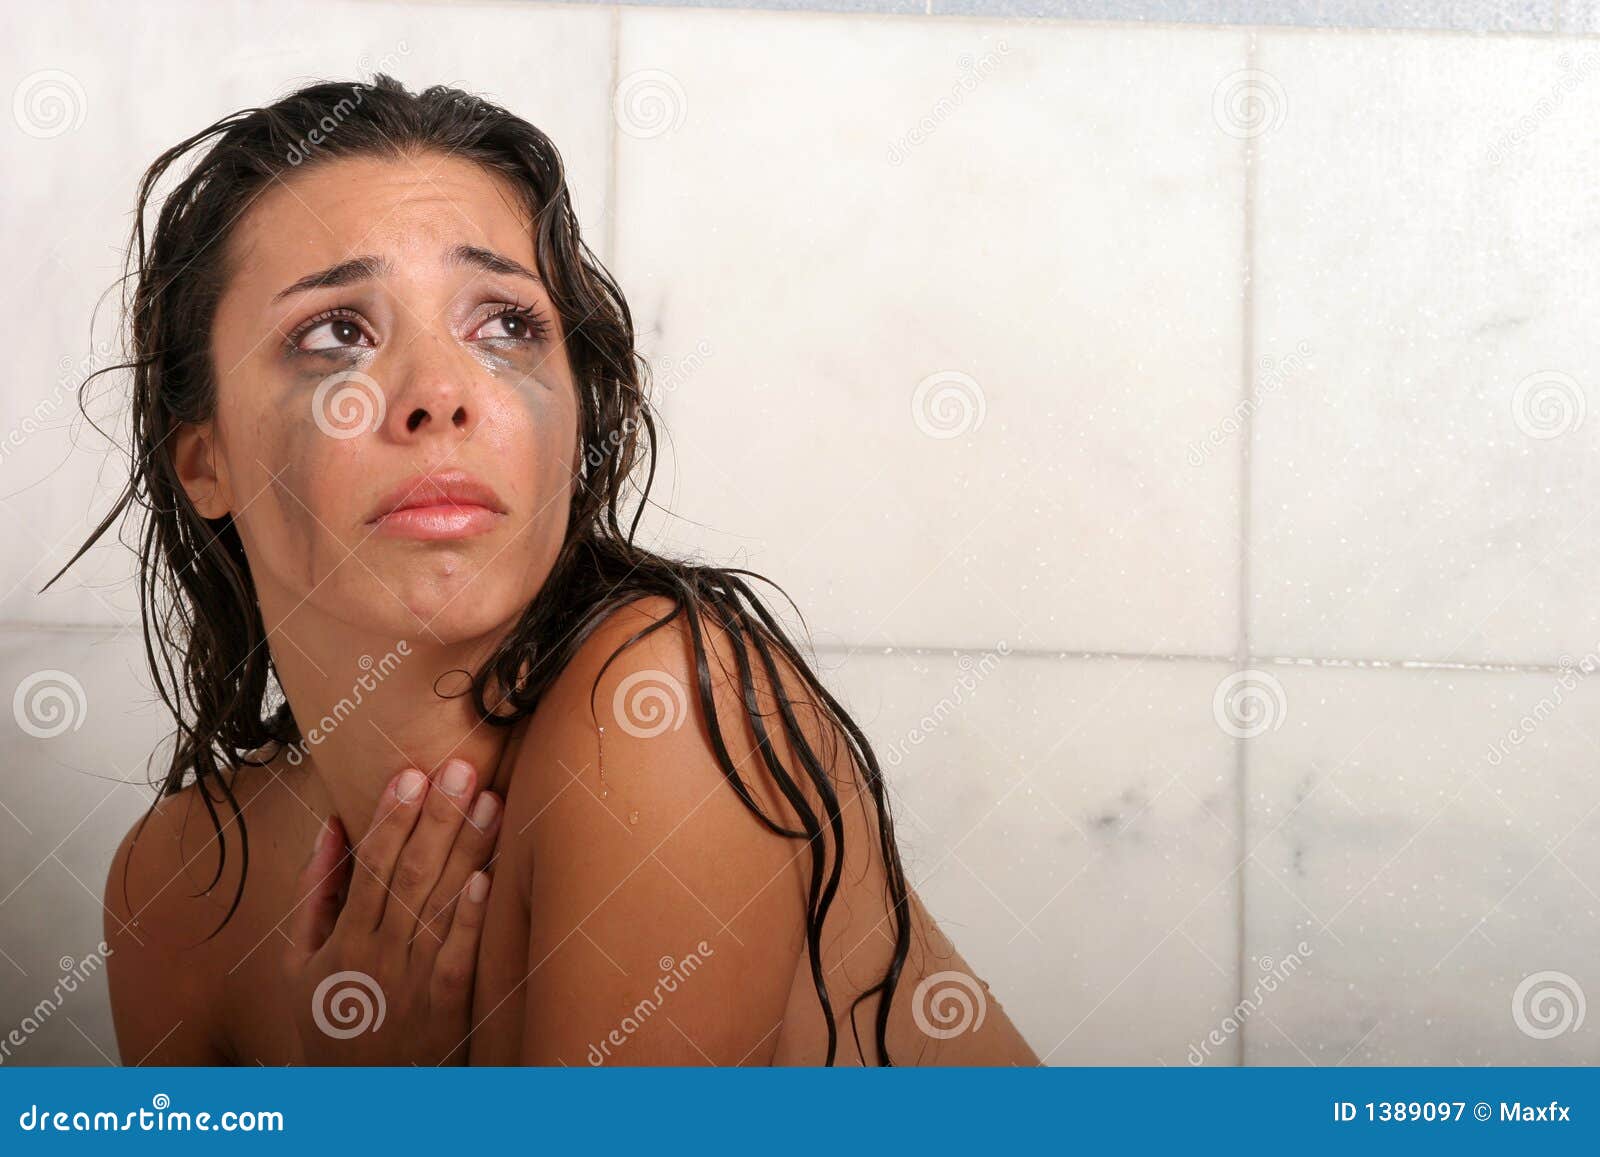 Nude woman crying